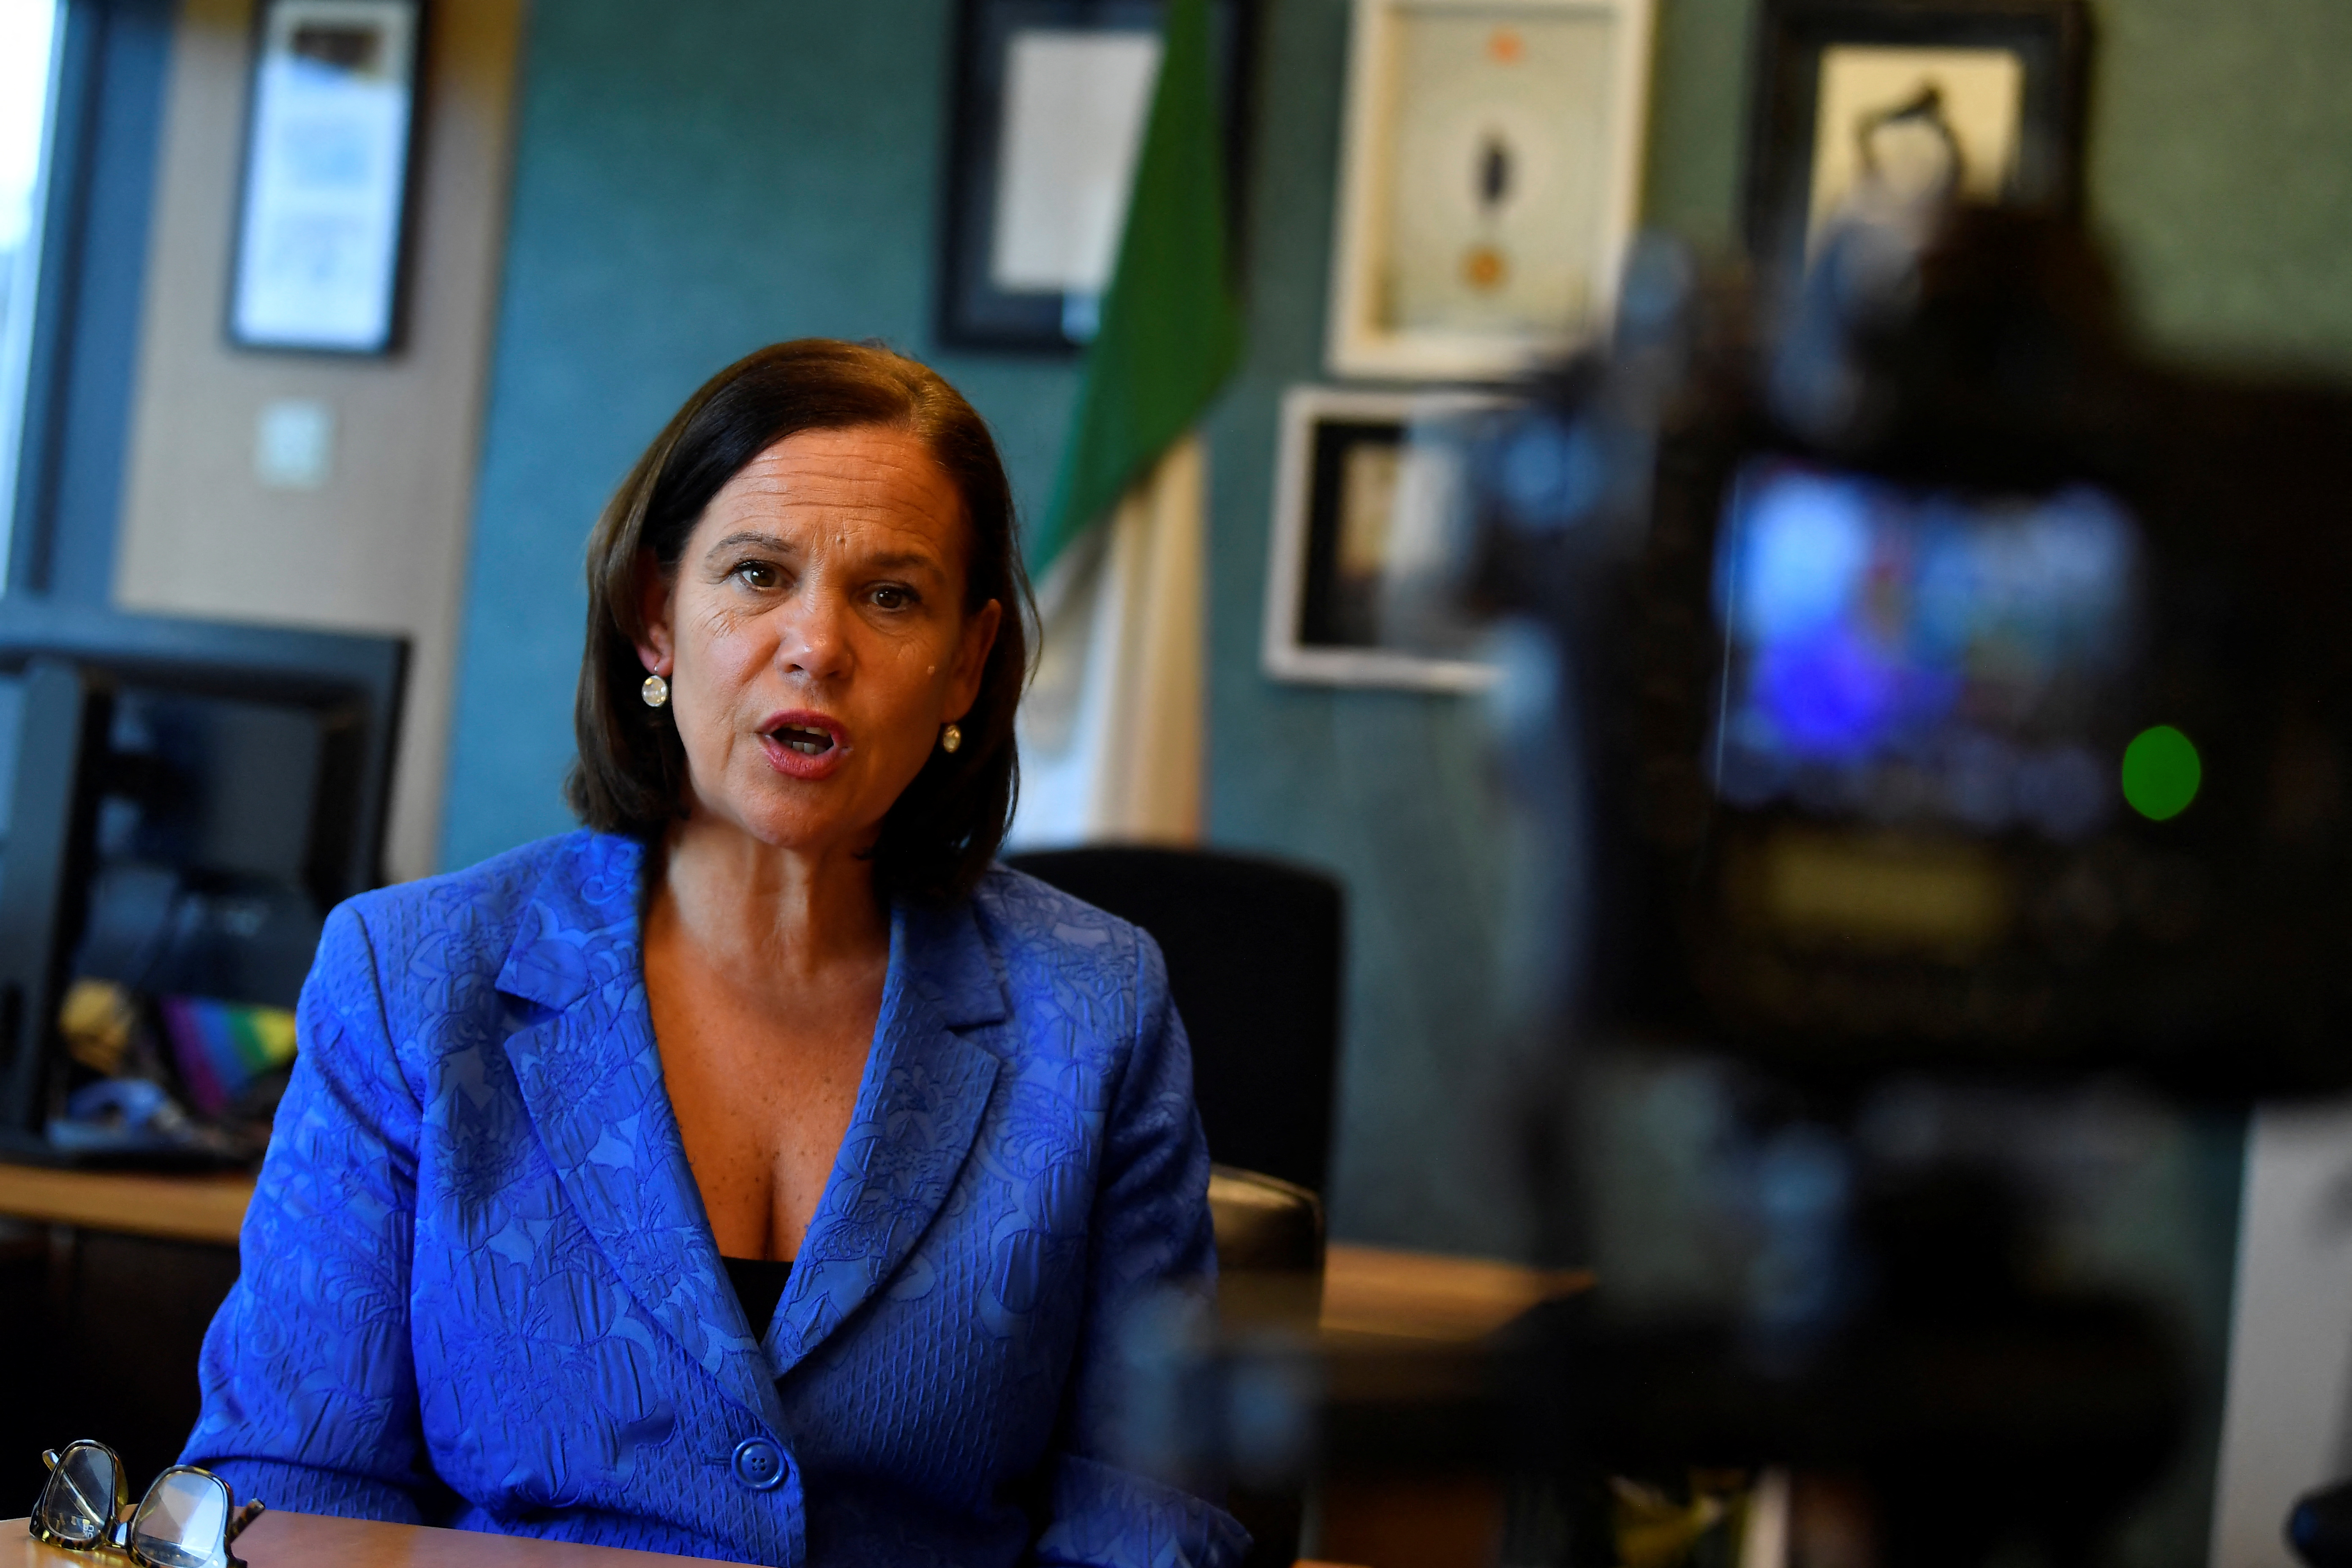 Sinn Fein leader Mary Lou McDonald speaks during an interview, in Dublin